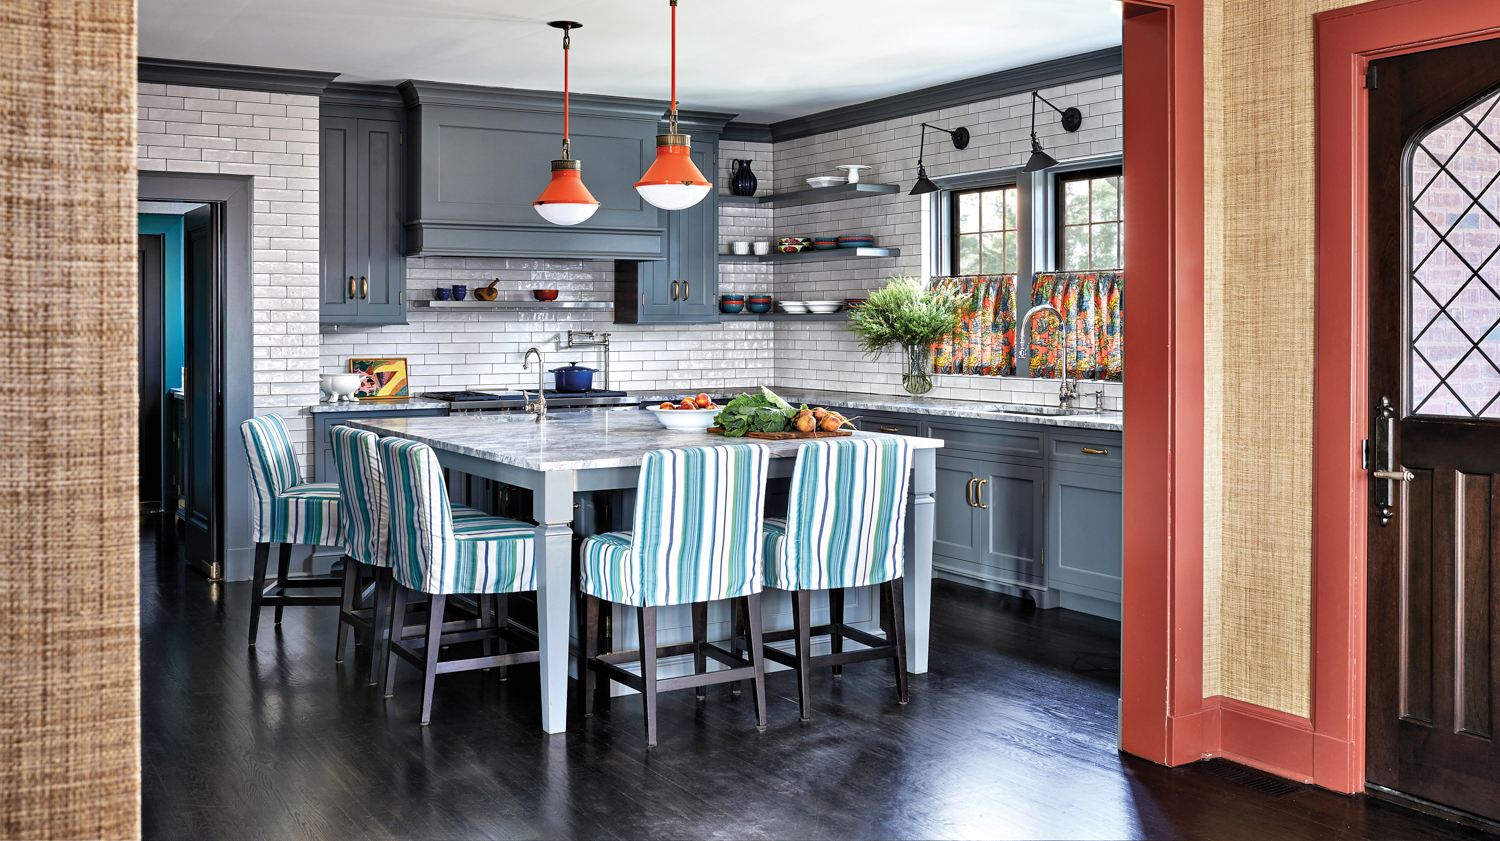 kitchen with striped chairs, orange...